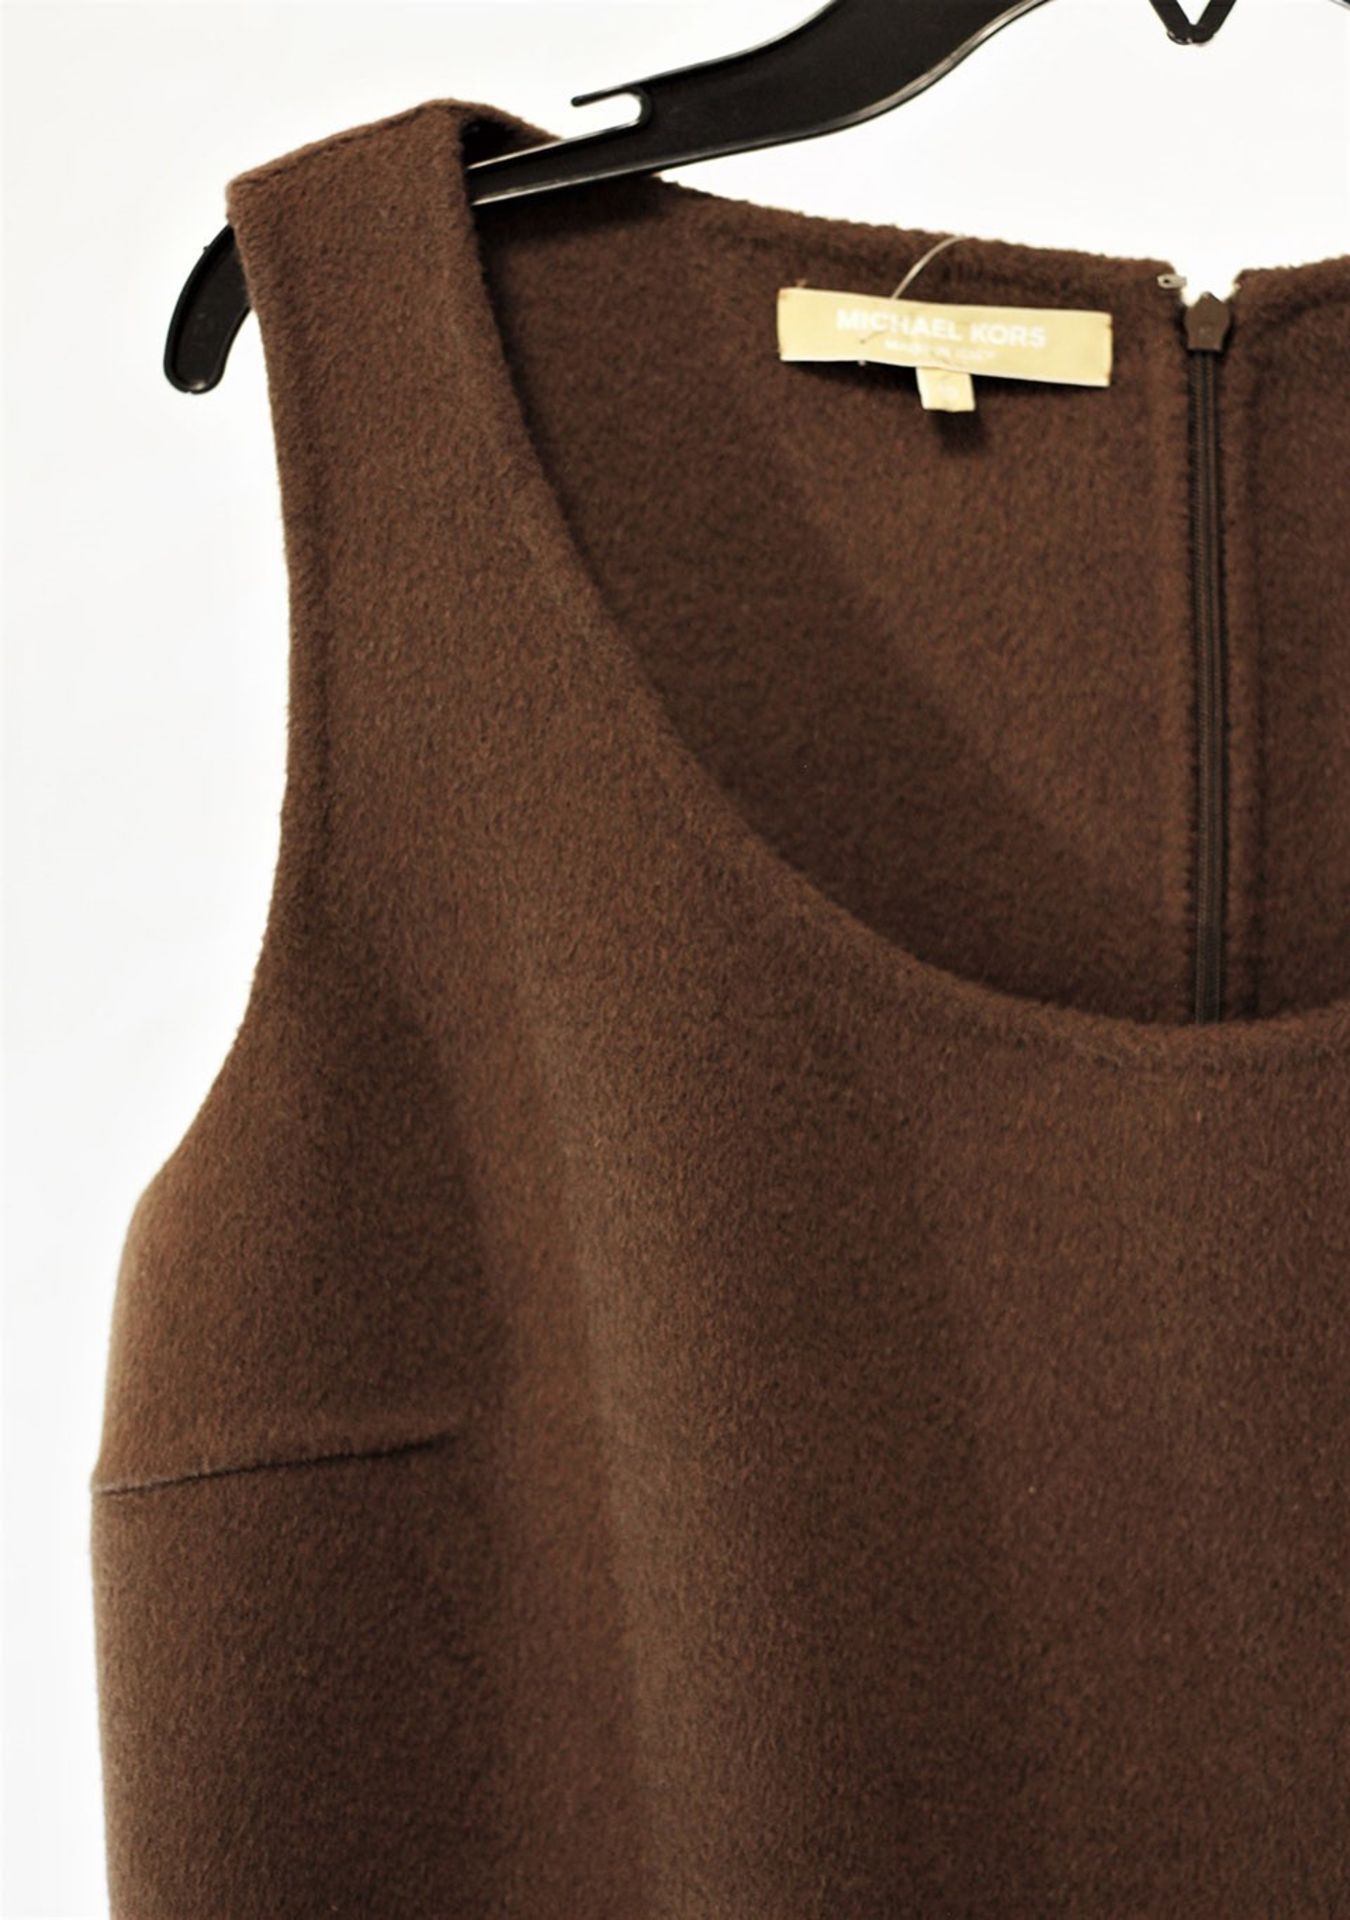 1 x Michael Kors Brown Dress - Size: 10 - Material: 55% Virgin Wool, 40% Angora, 5% Cashgora - - Image 4 of 6